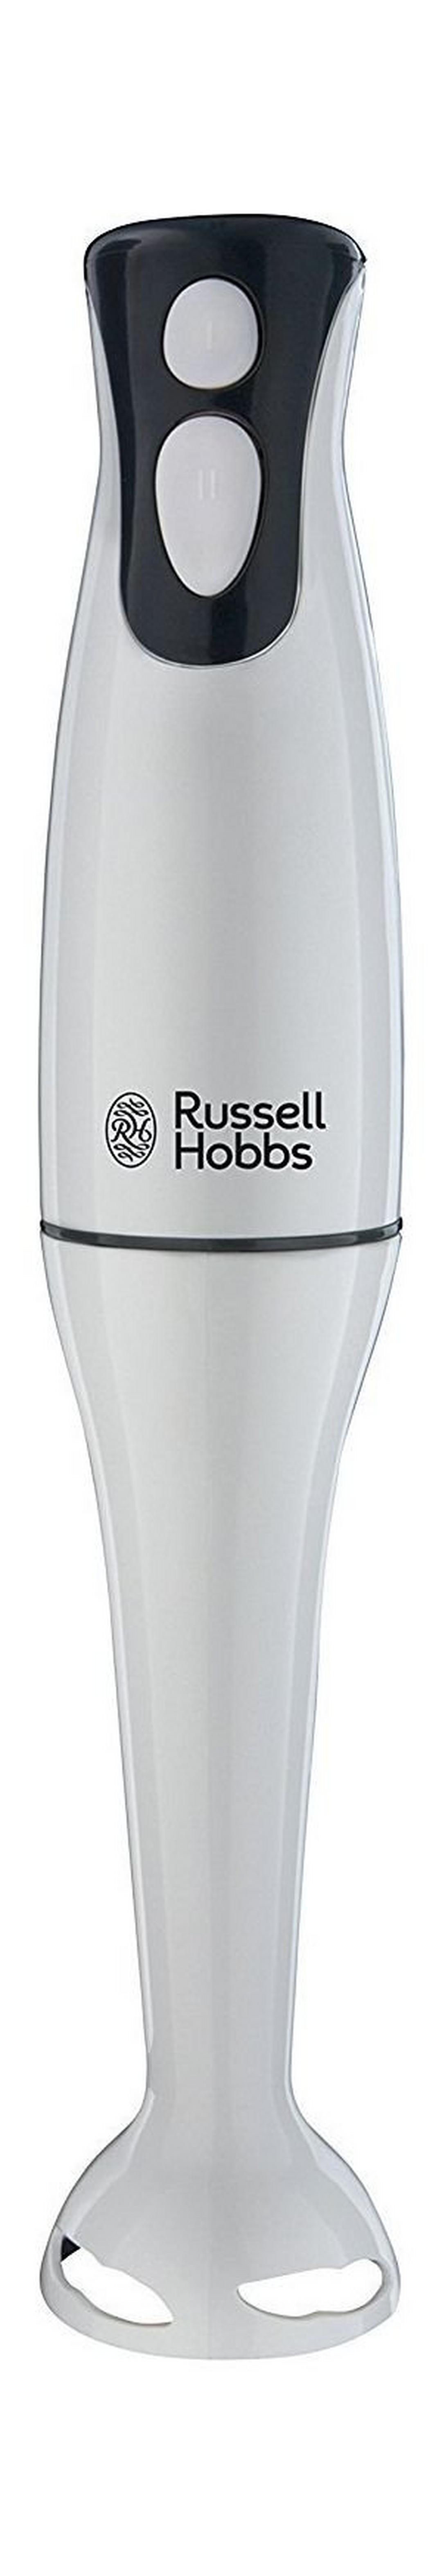 Russell Hobbs Hand Blender - 200W (22241)